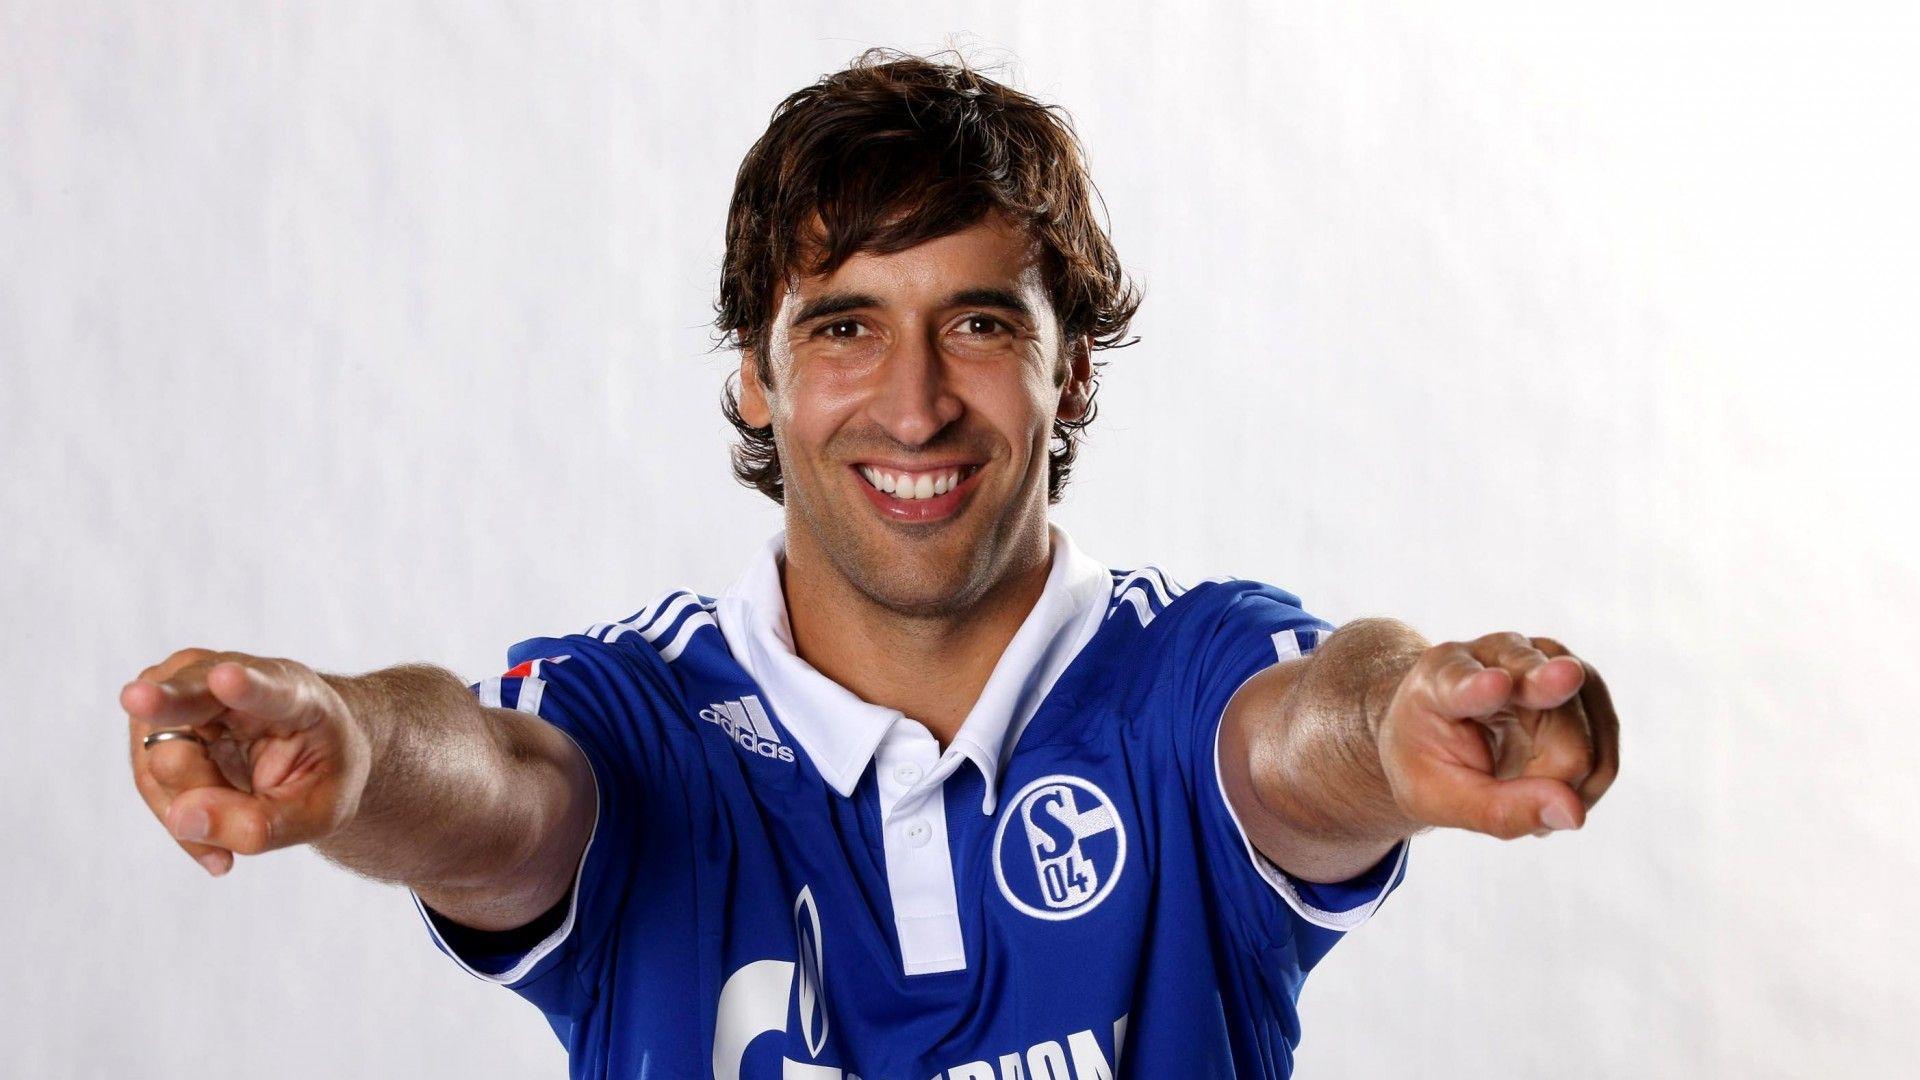 Download 1920x1080 Raul Gonzalez, Fc Schalke, Smiling, Football